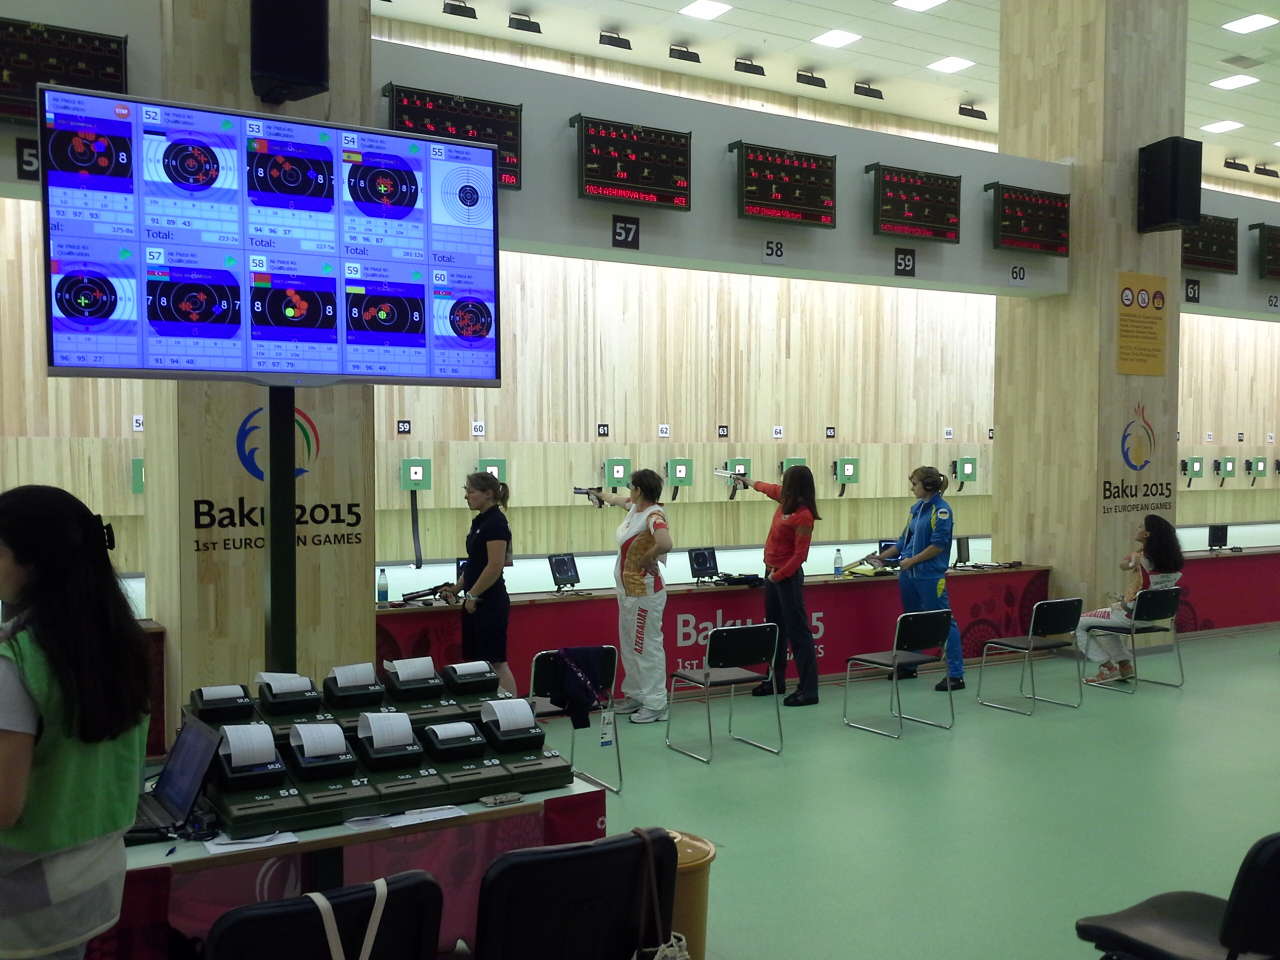 Baku 2015: Azerbaijani female shooters hope to improve results